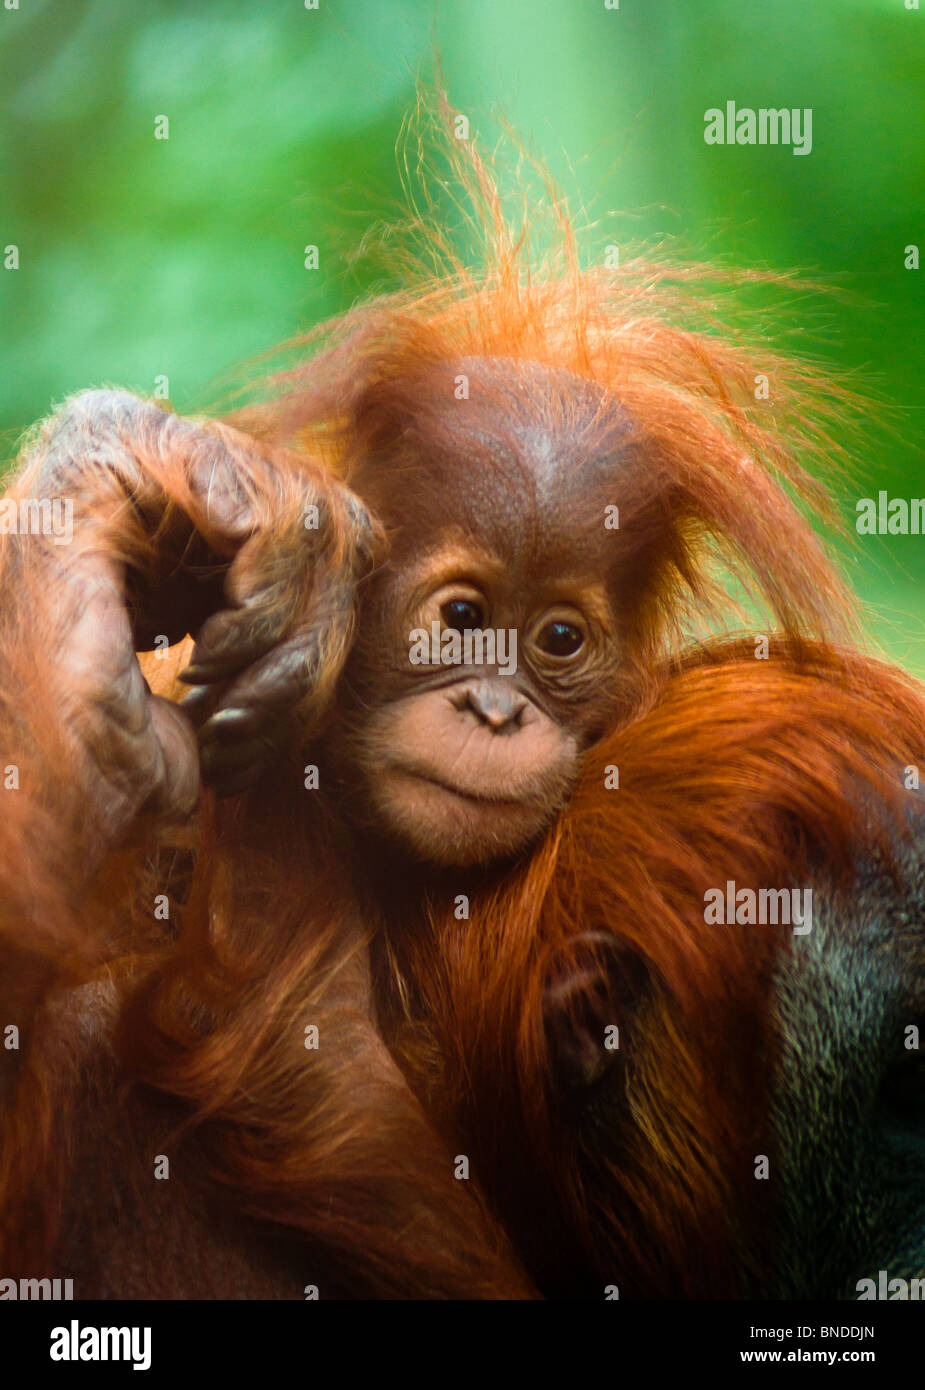 Baby Orangutan riding on its mother's back Stock Photo